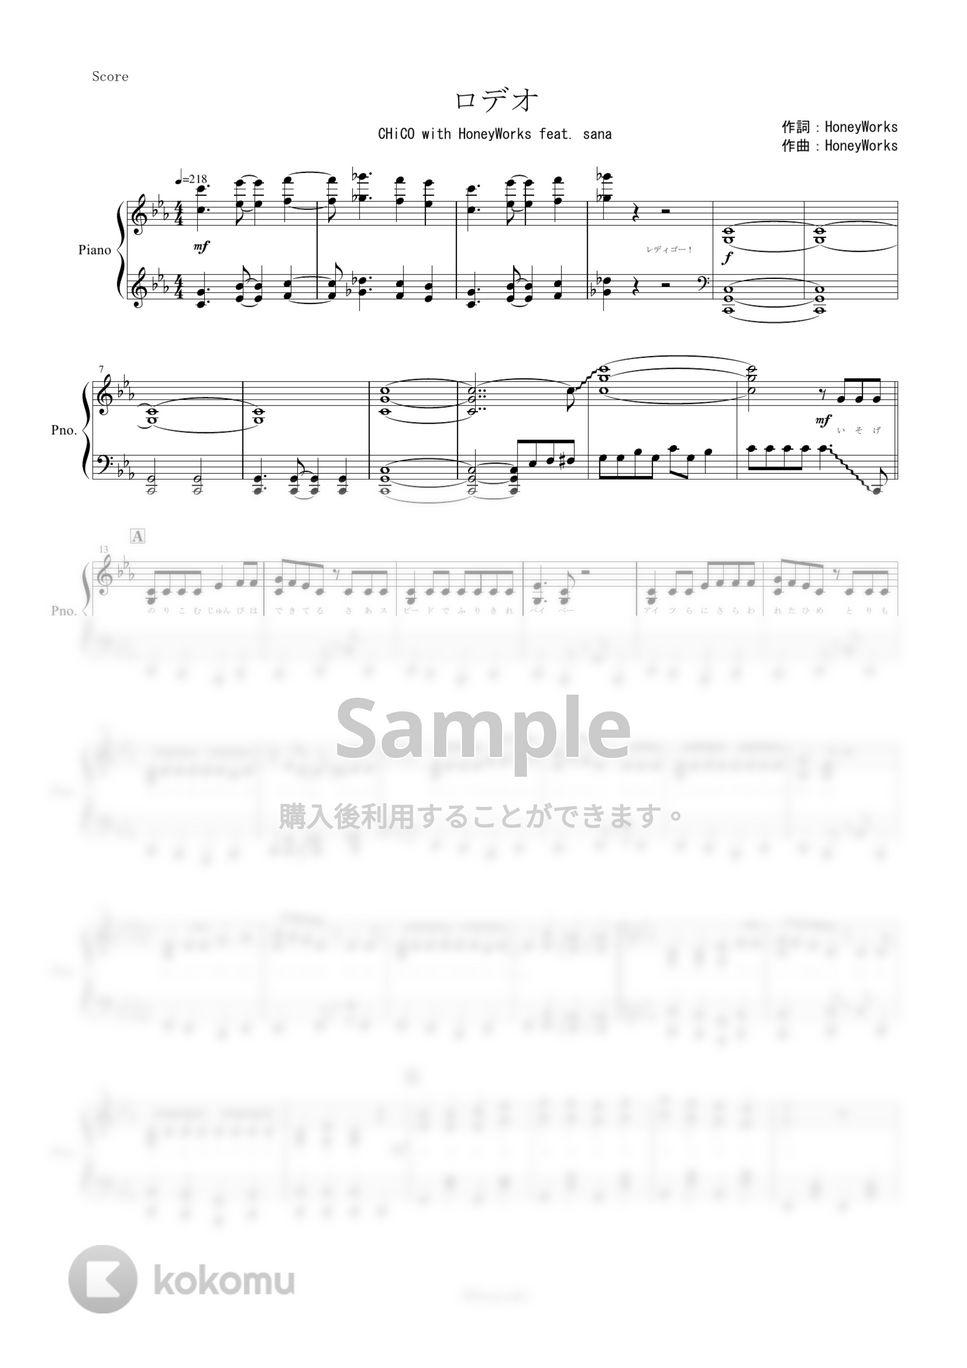 CHiCO with HoneyWorks - ロデオ feat. sana (ピアノ楽譜/全６ページ) by yoshi